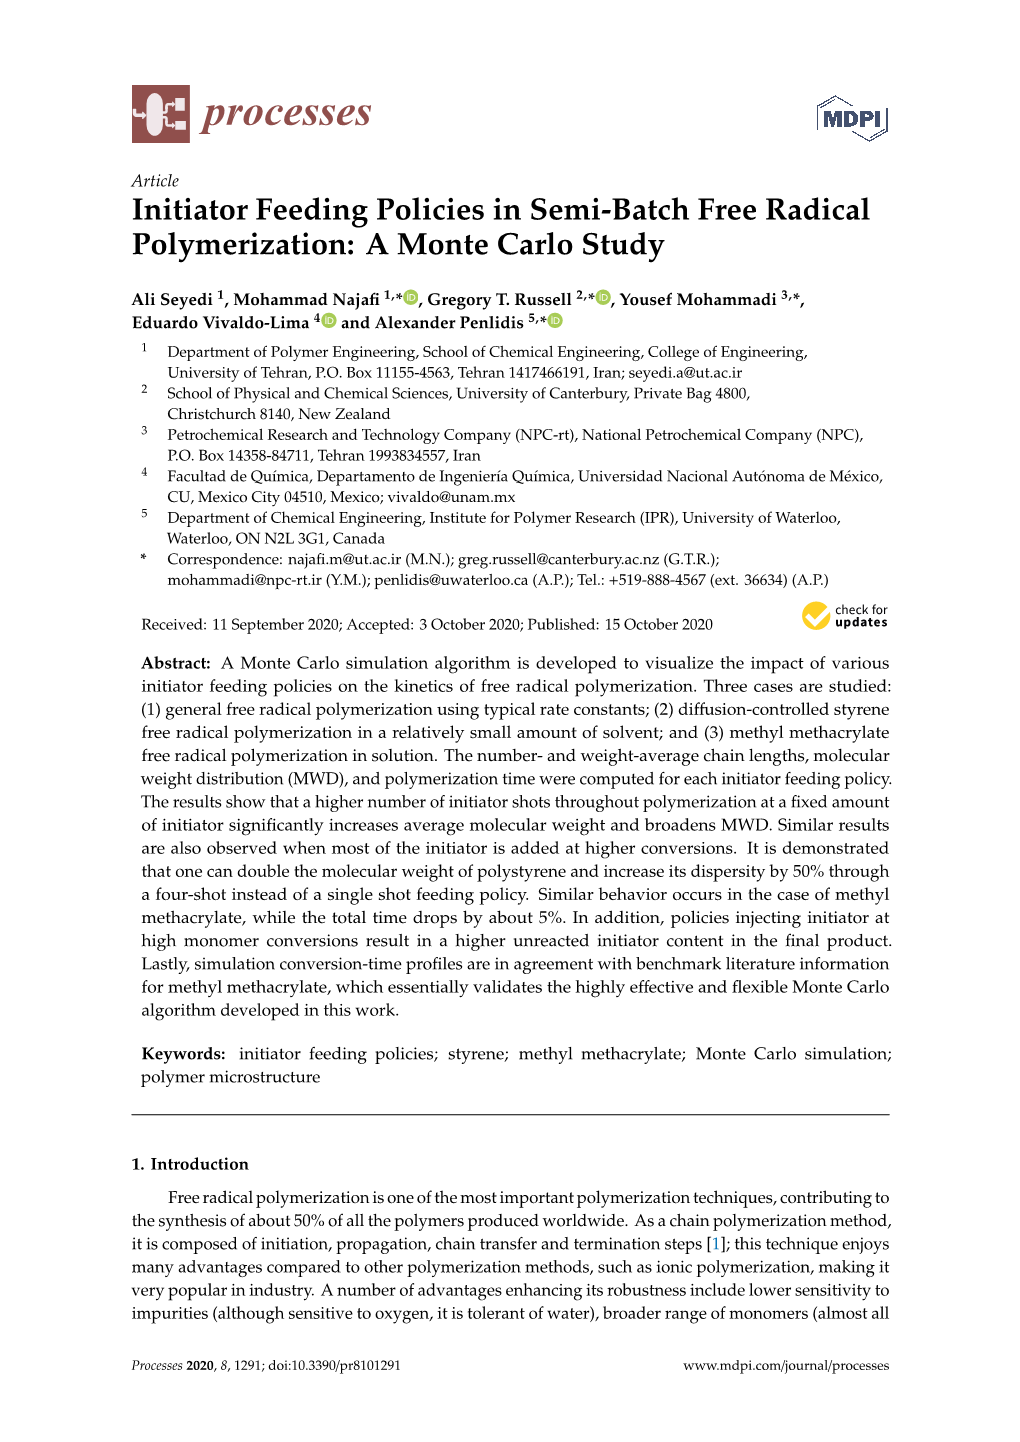 Initiator Feeding Policies in Semi-Batch Free Radical Polymerization: a Monte Carlo Study